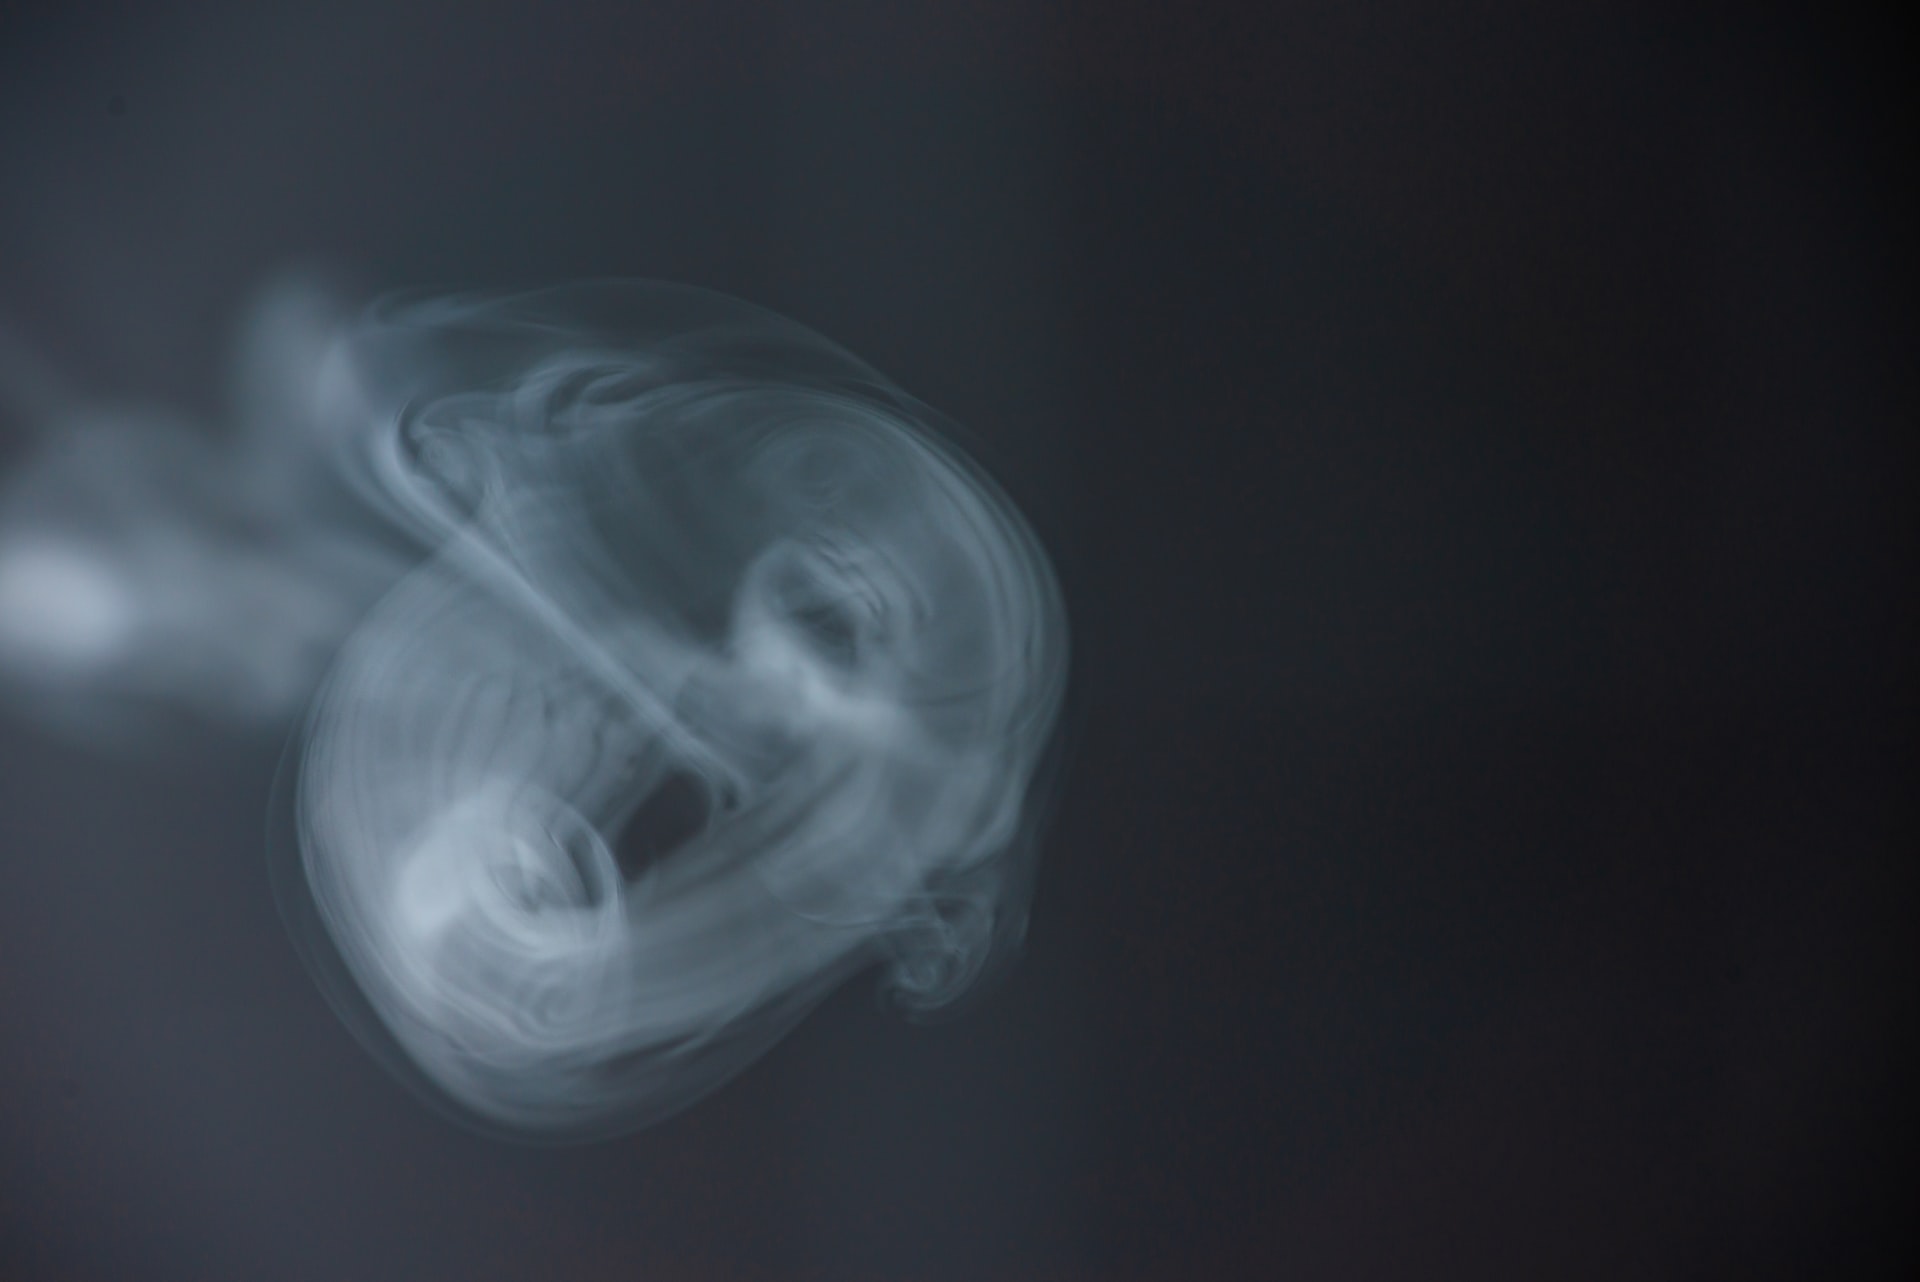 A cloud of nicotine vapor hangs in the air